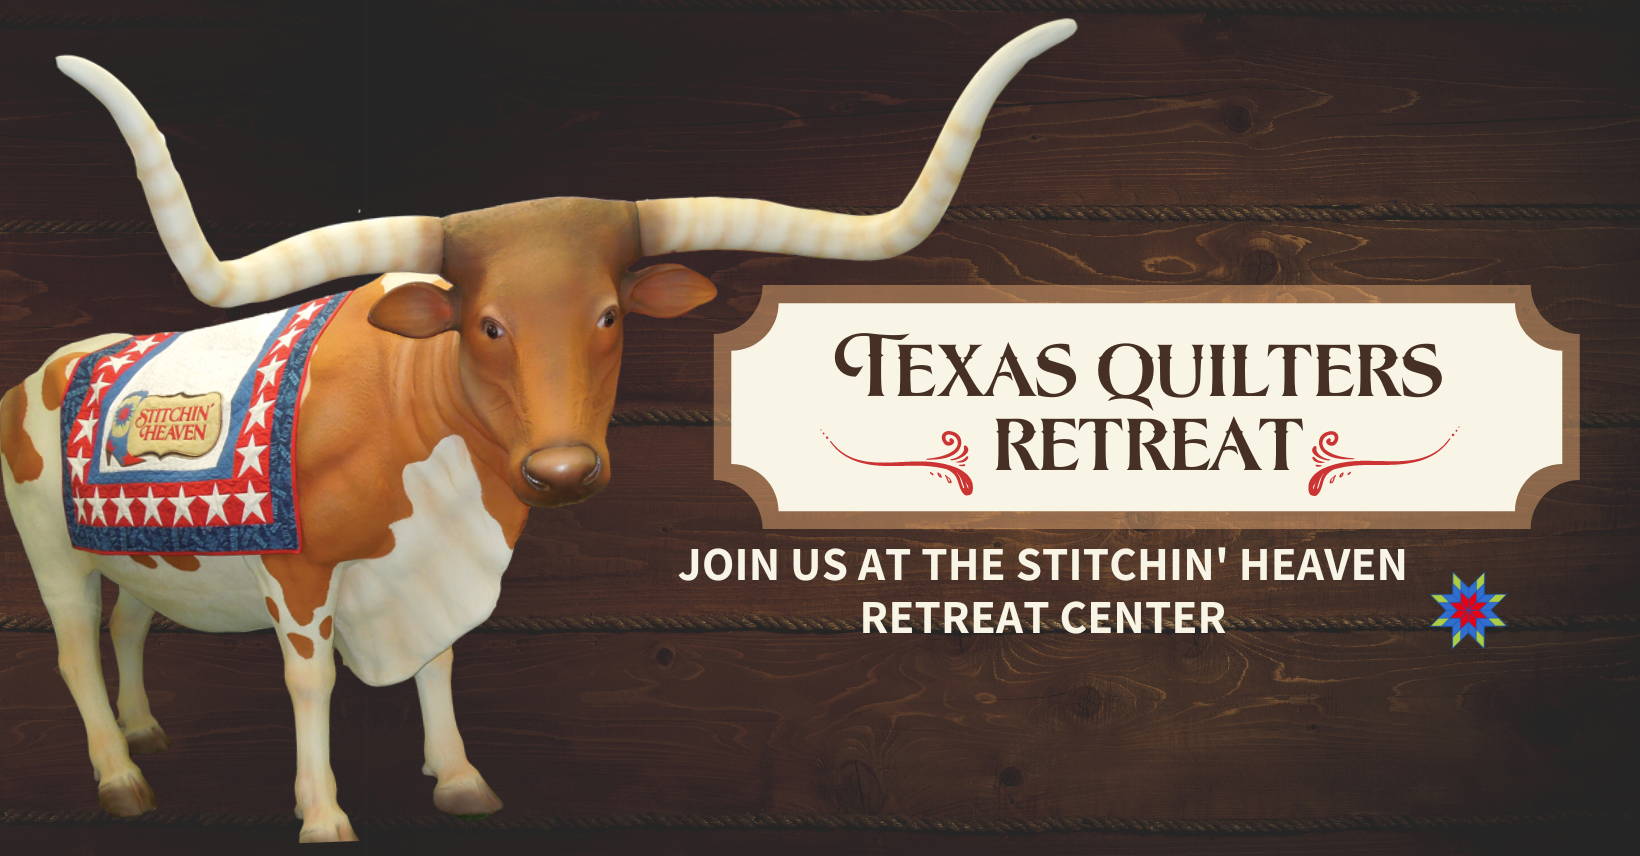 Texas Quilter's Retreat banner